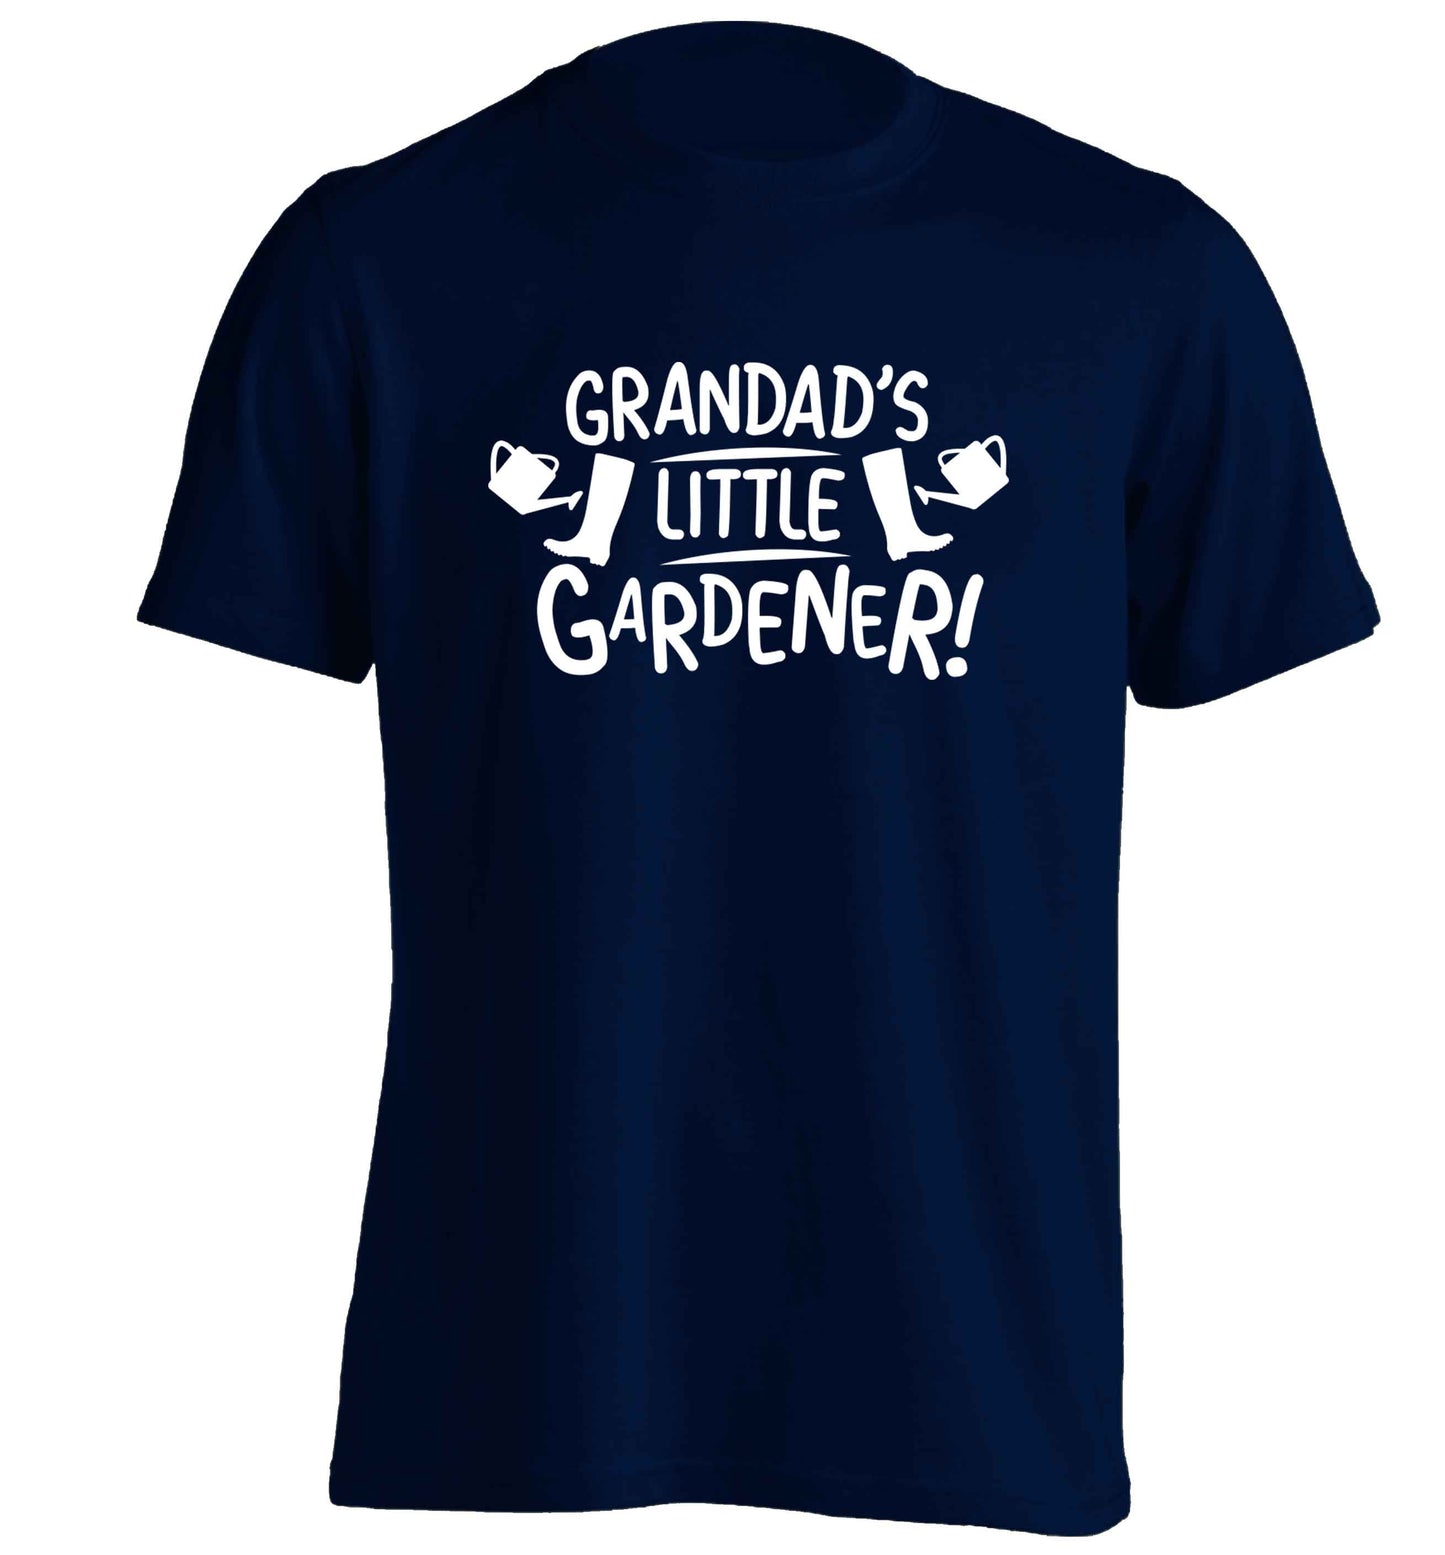 Grandad's little gardener adults unisex navy Tshirt 2XL